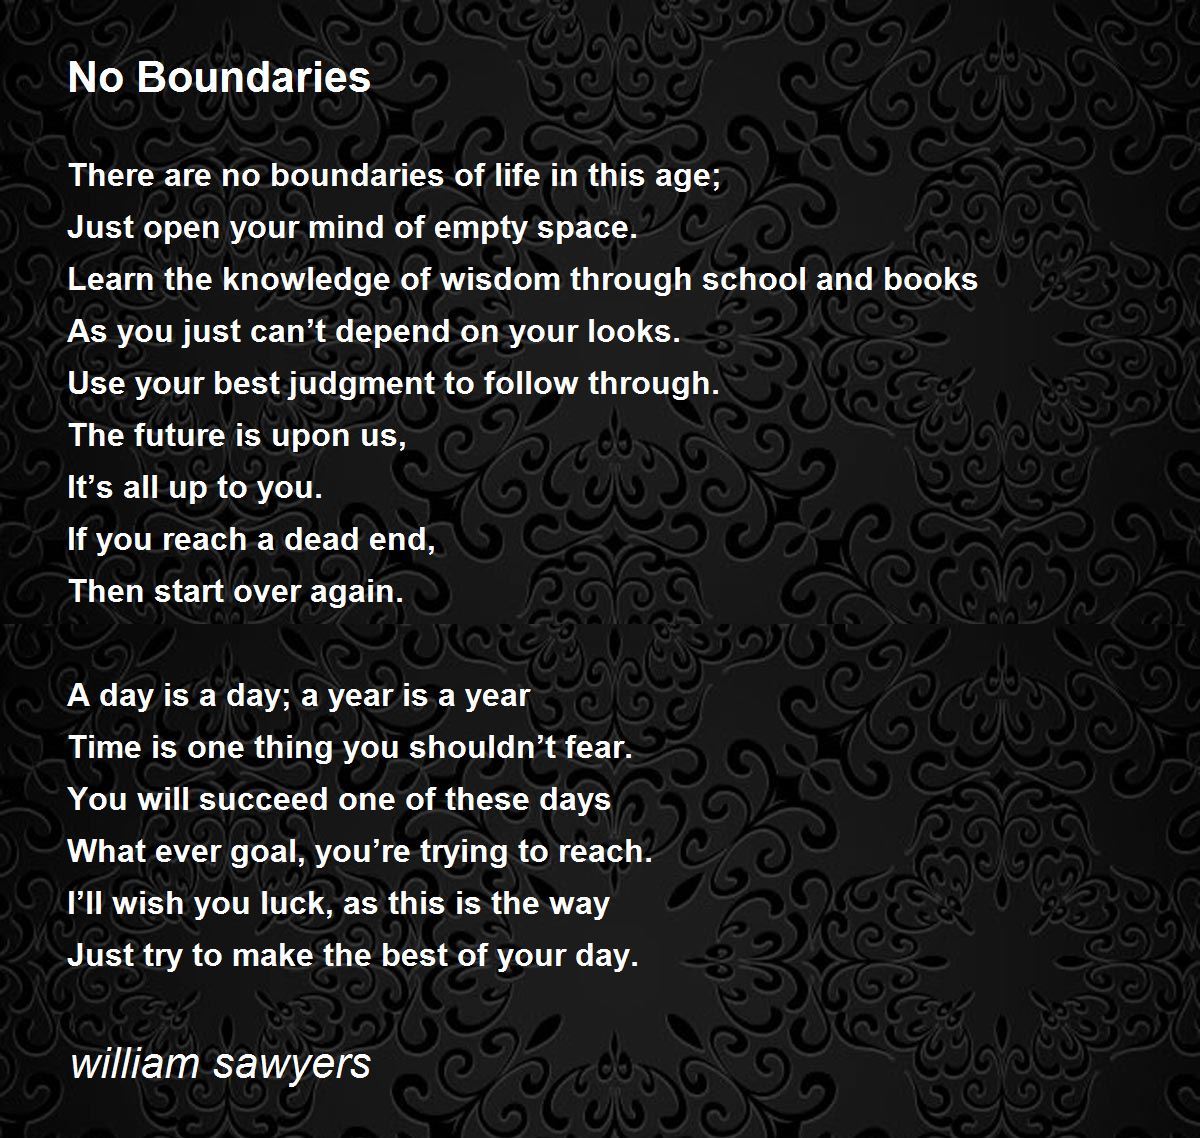 No Boundaries opens